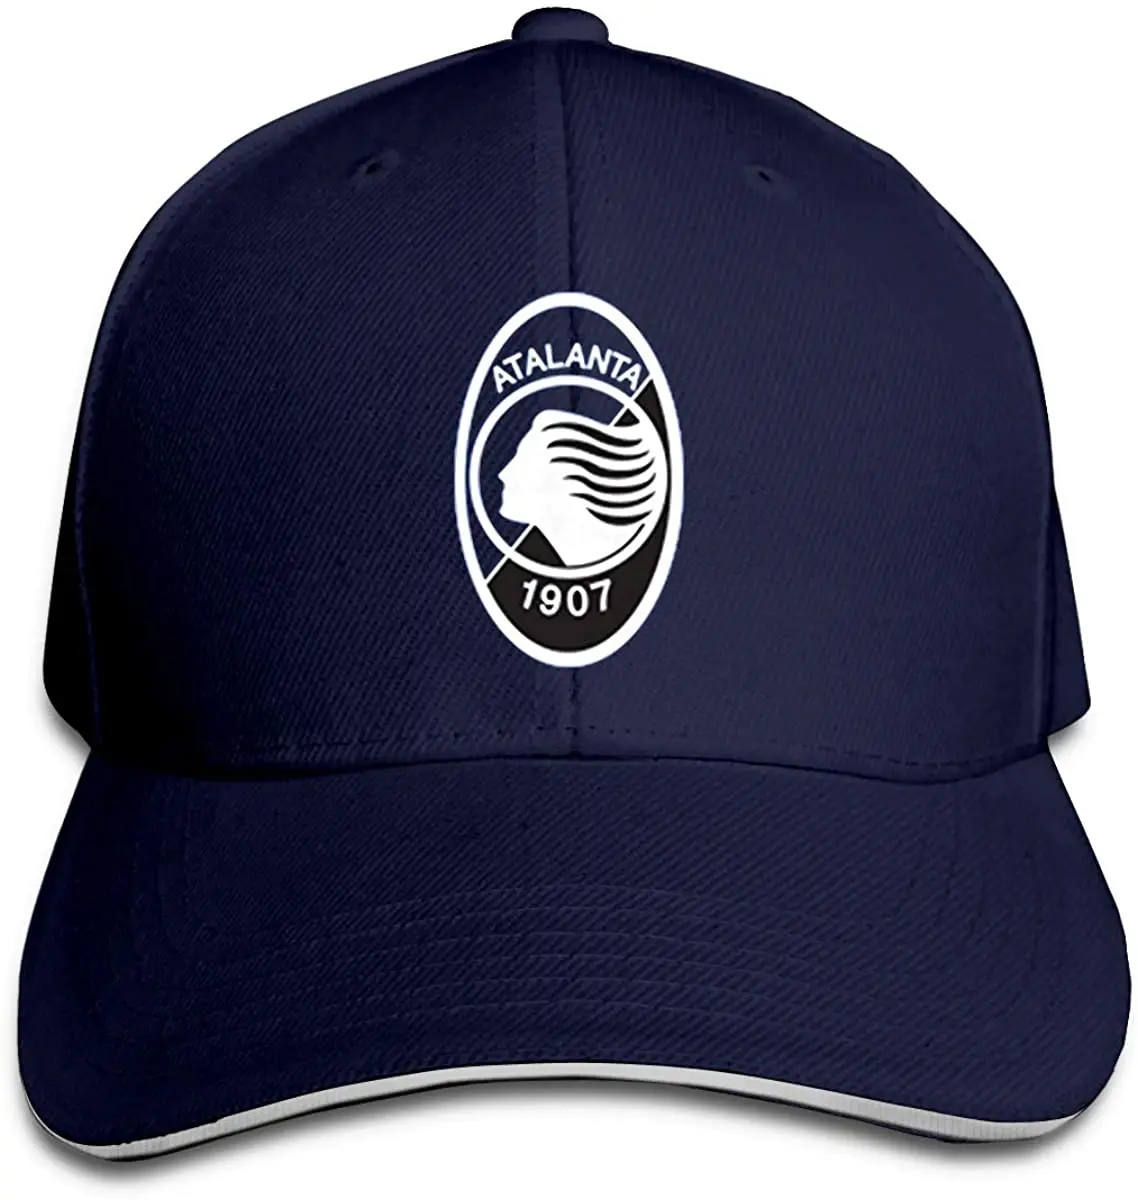 

Atalanta BC Futbol Unisex Casual Baseball Cap Adjustable Hip Hop Trucker Sandwich Hat Golf Sports for Men Women Black